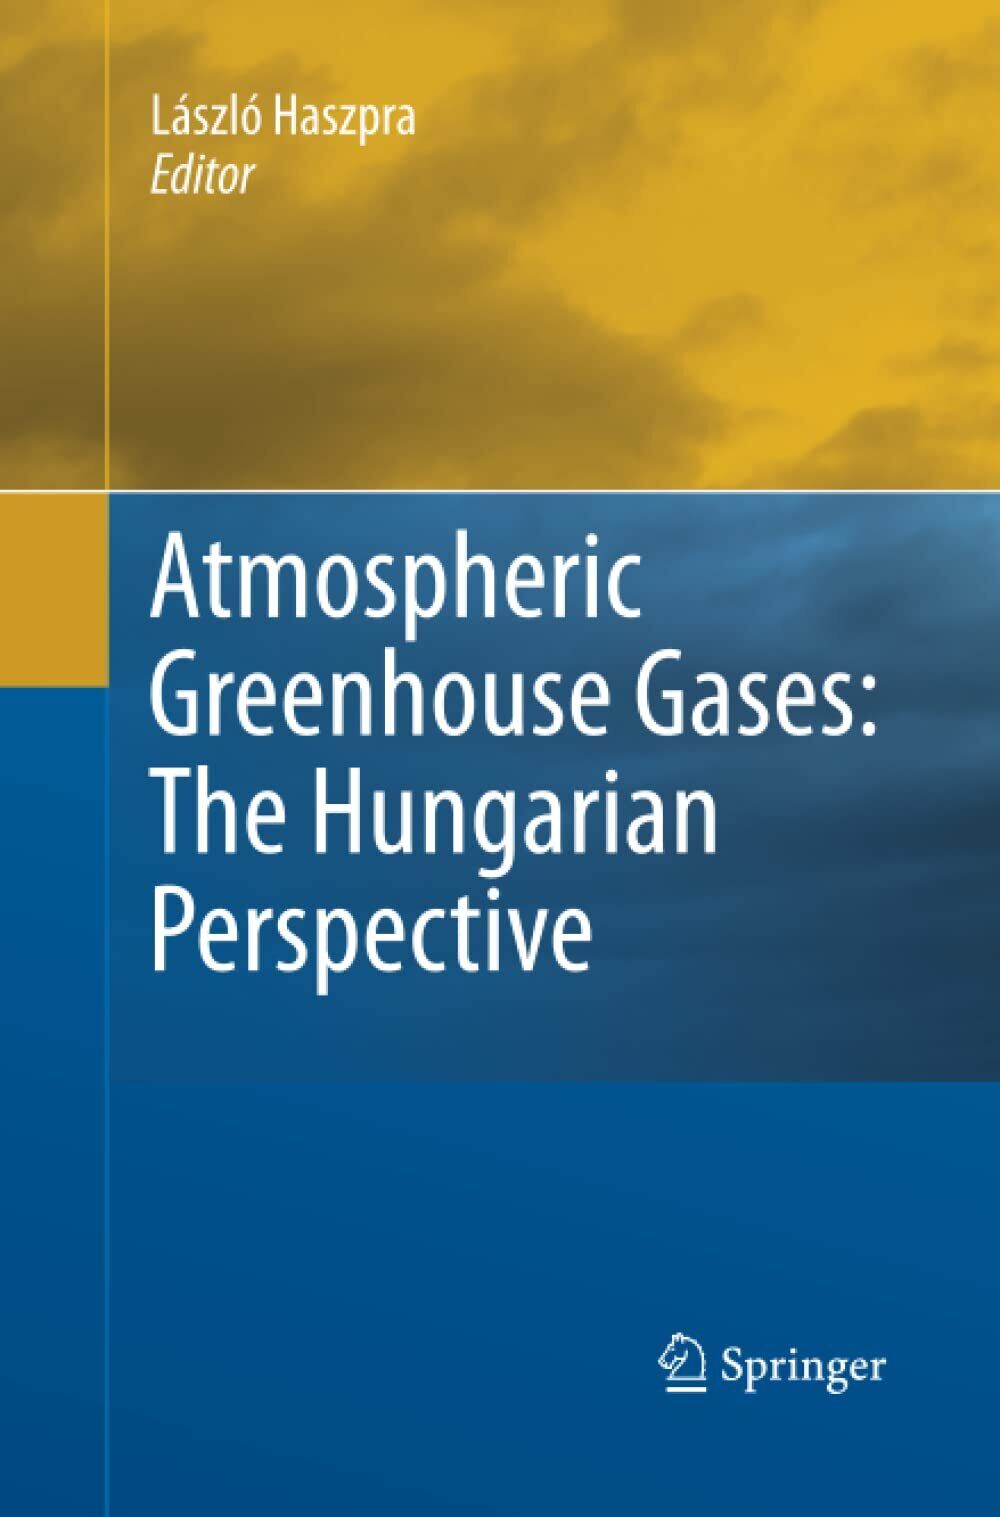 Atmospheric Greenhouse Gases - L?szl? Haszpra - Springer, 2014